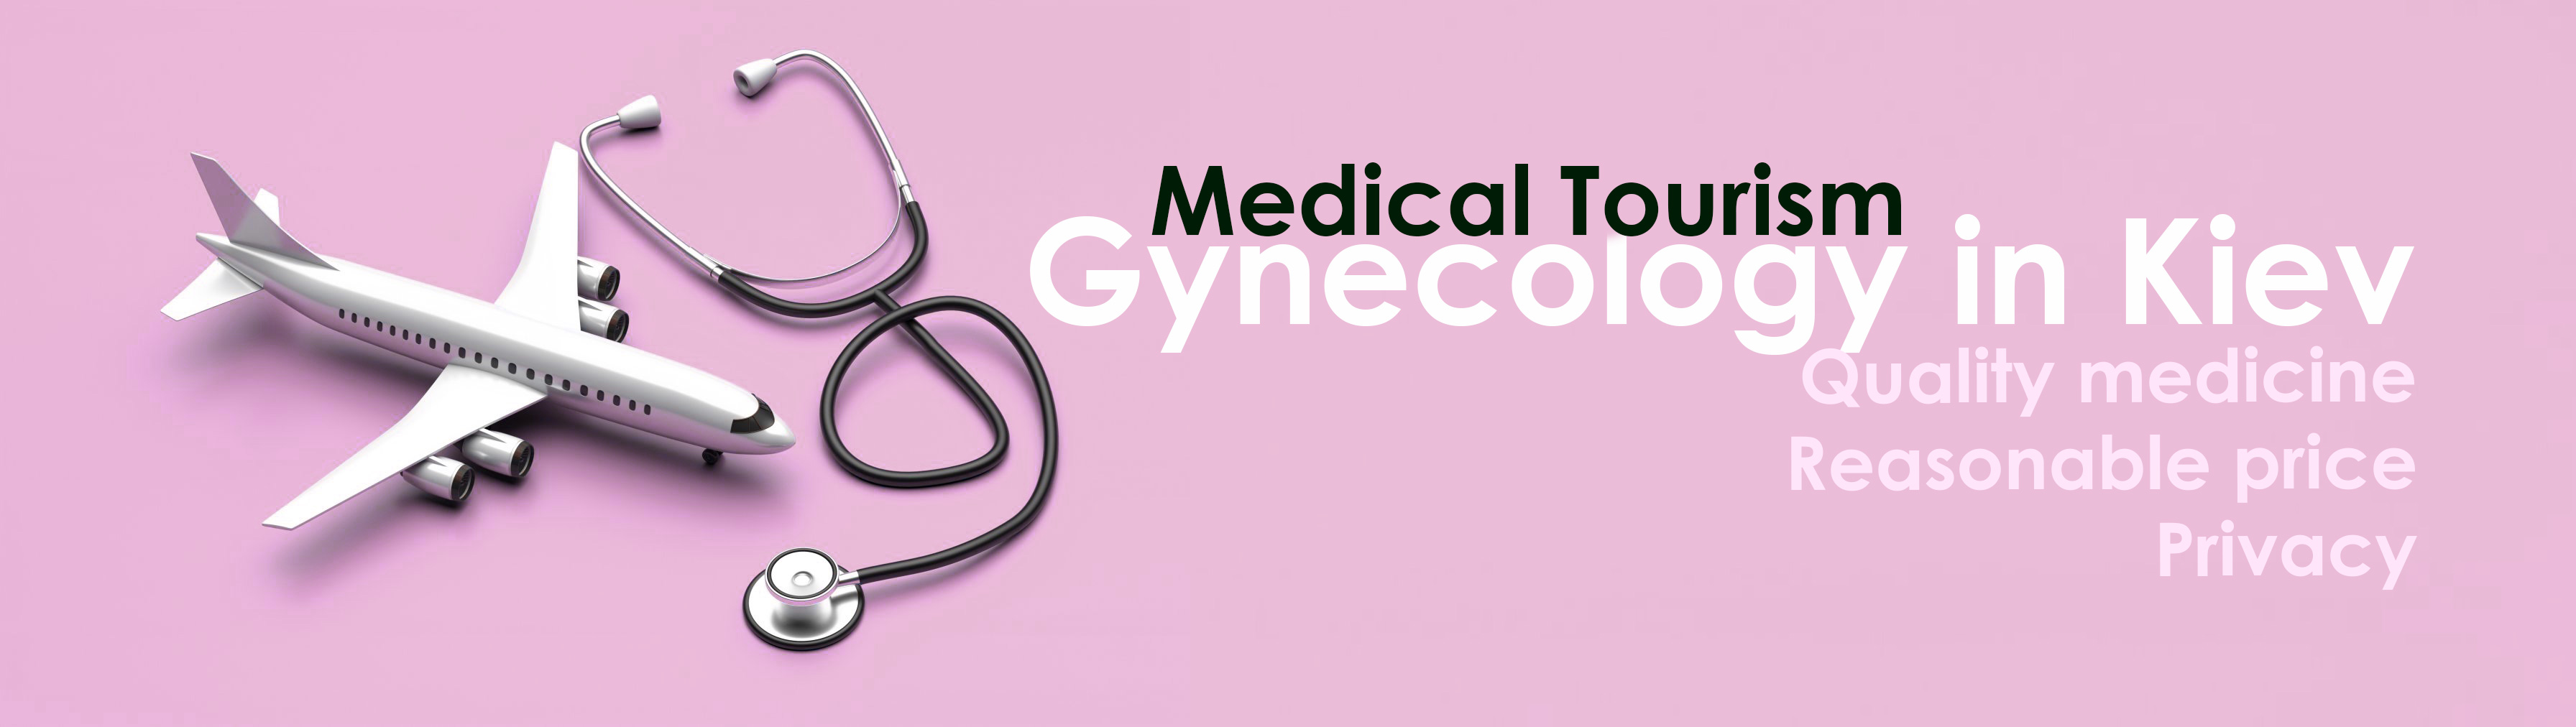 Medical Tourism Gynecology in Kiev